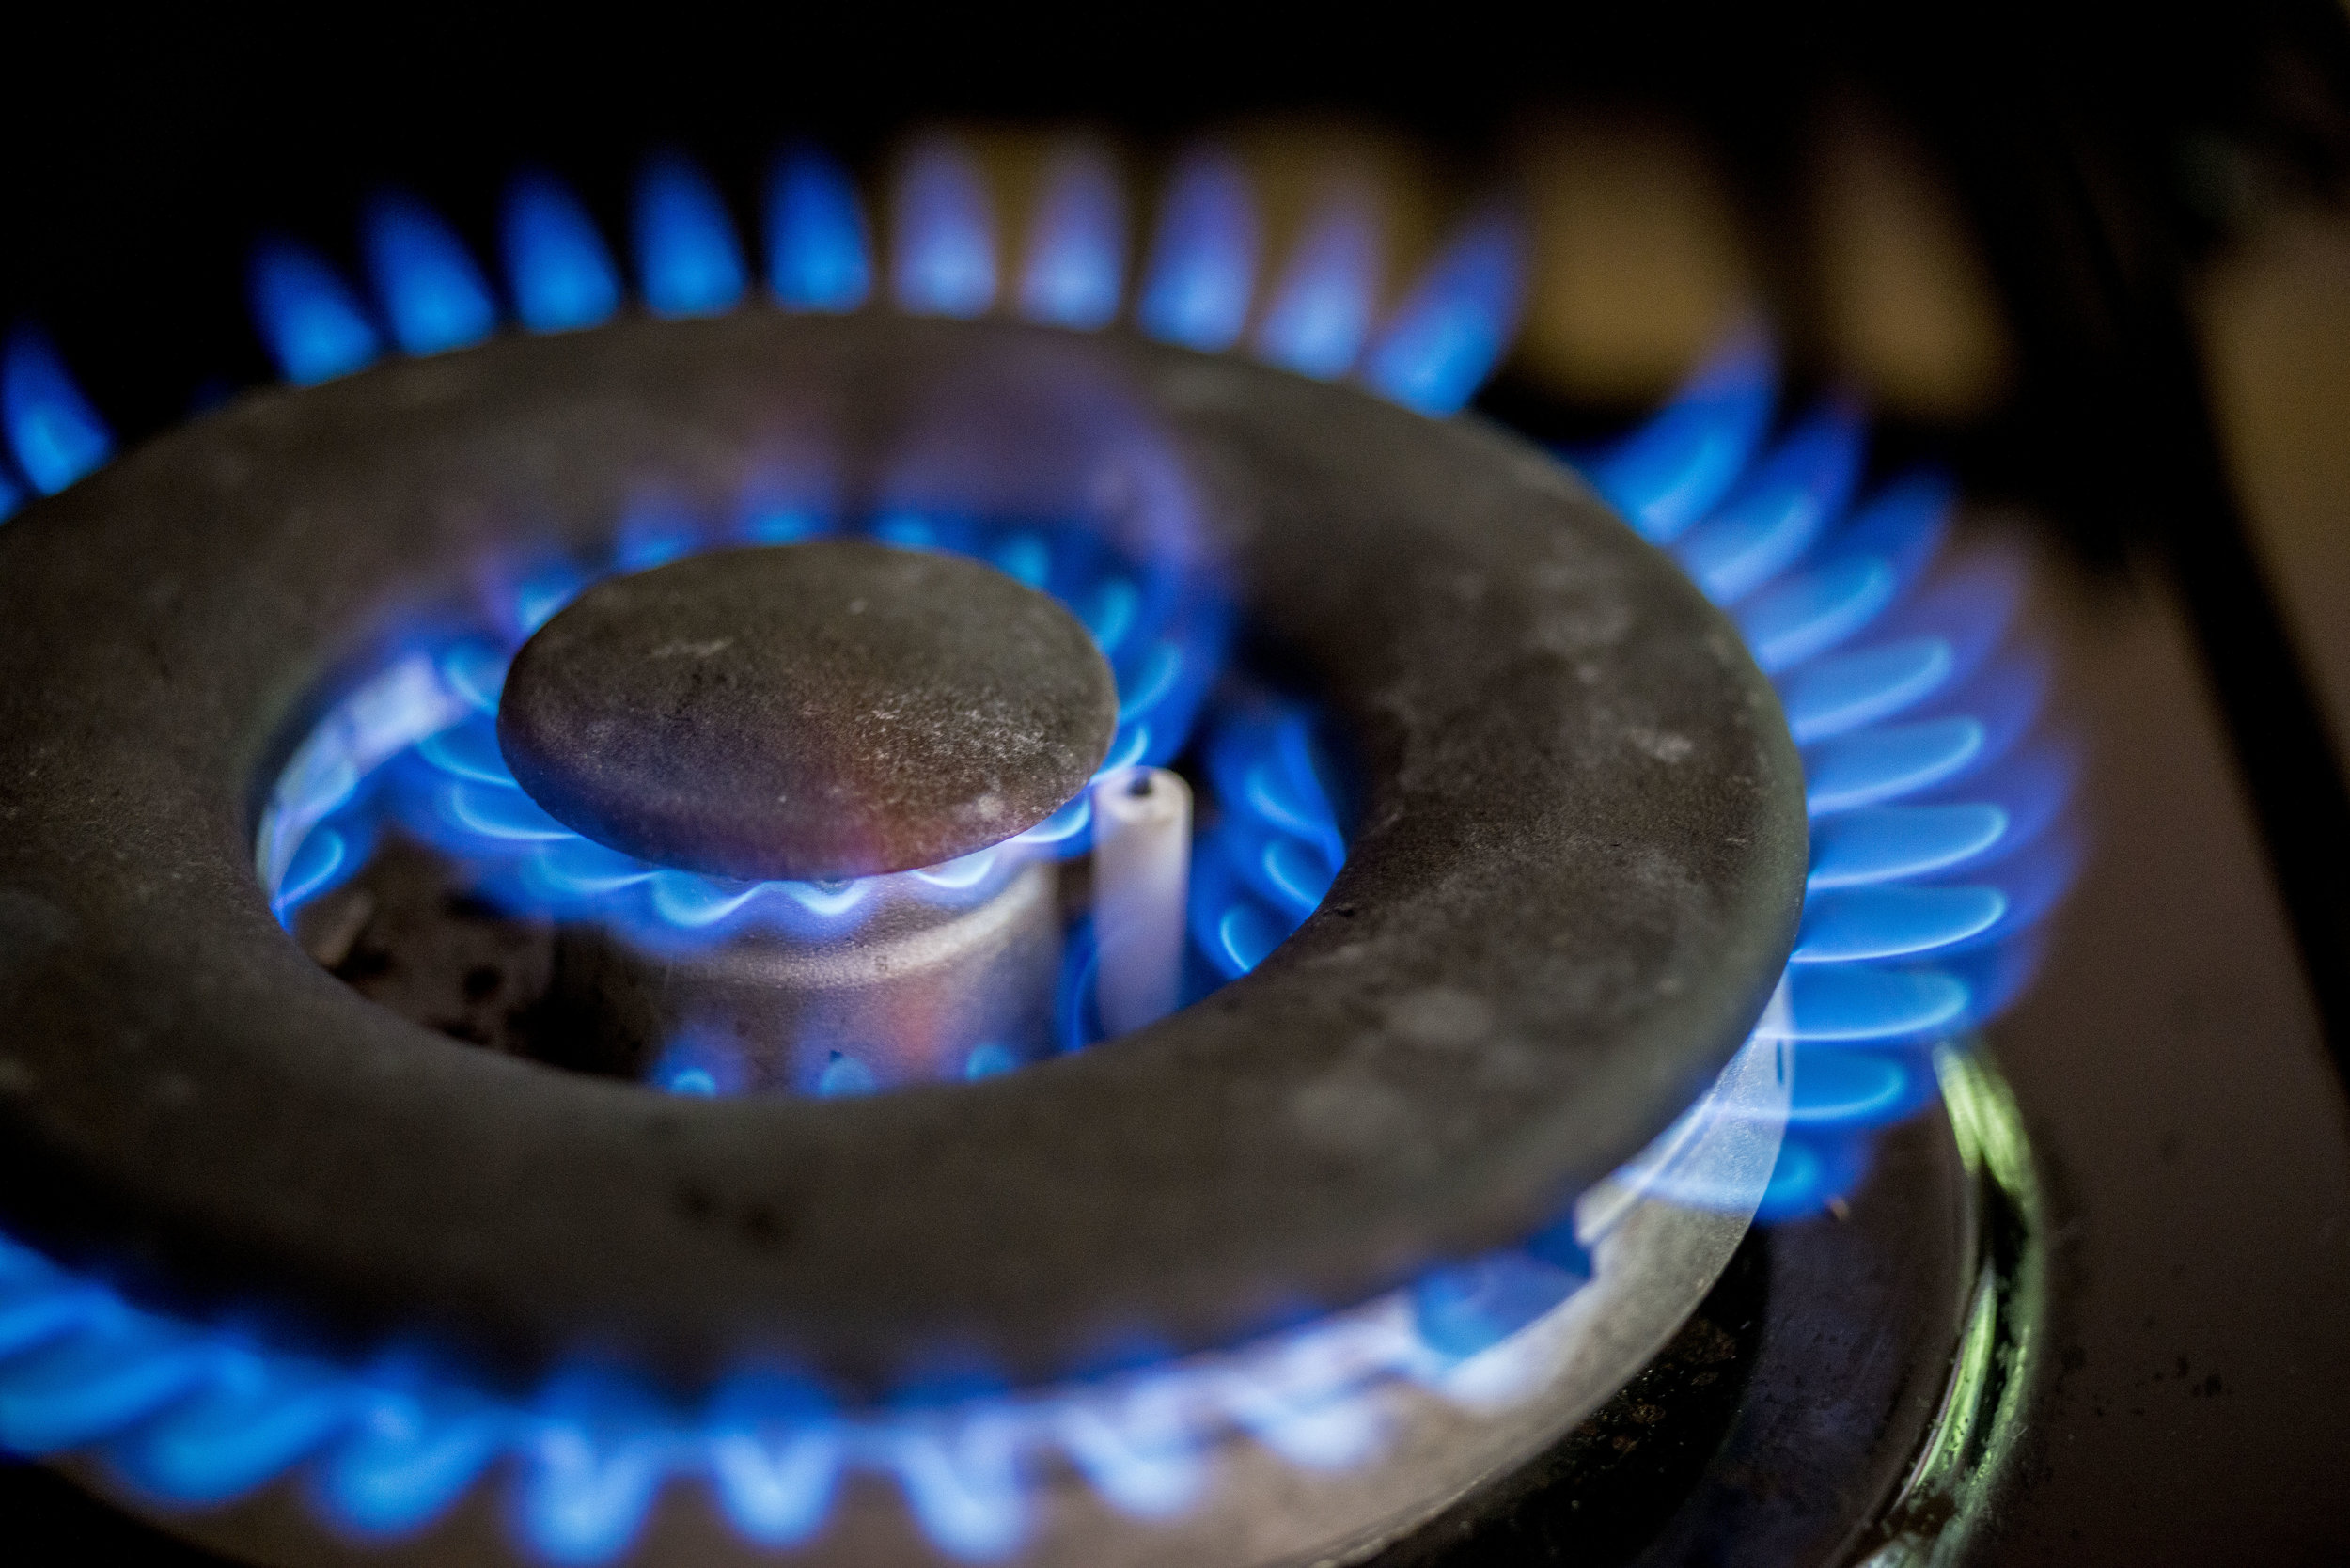  Standard gas range burner.  Image courtesy of and copyright Puget Sound Energy. 